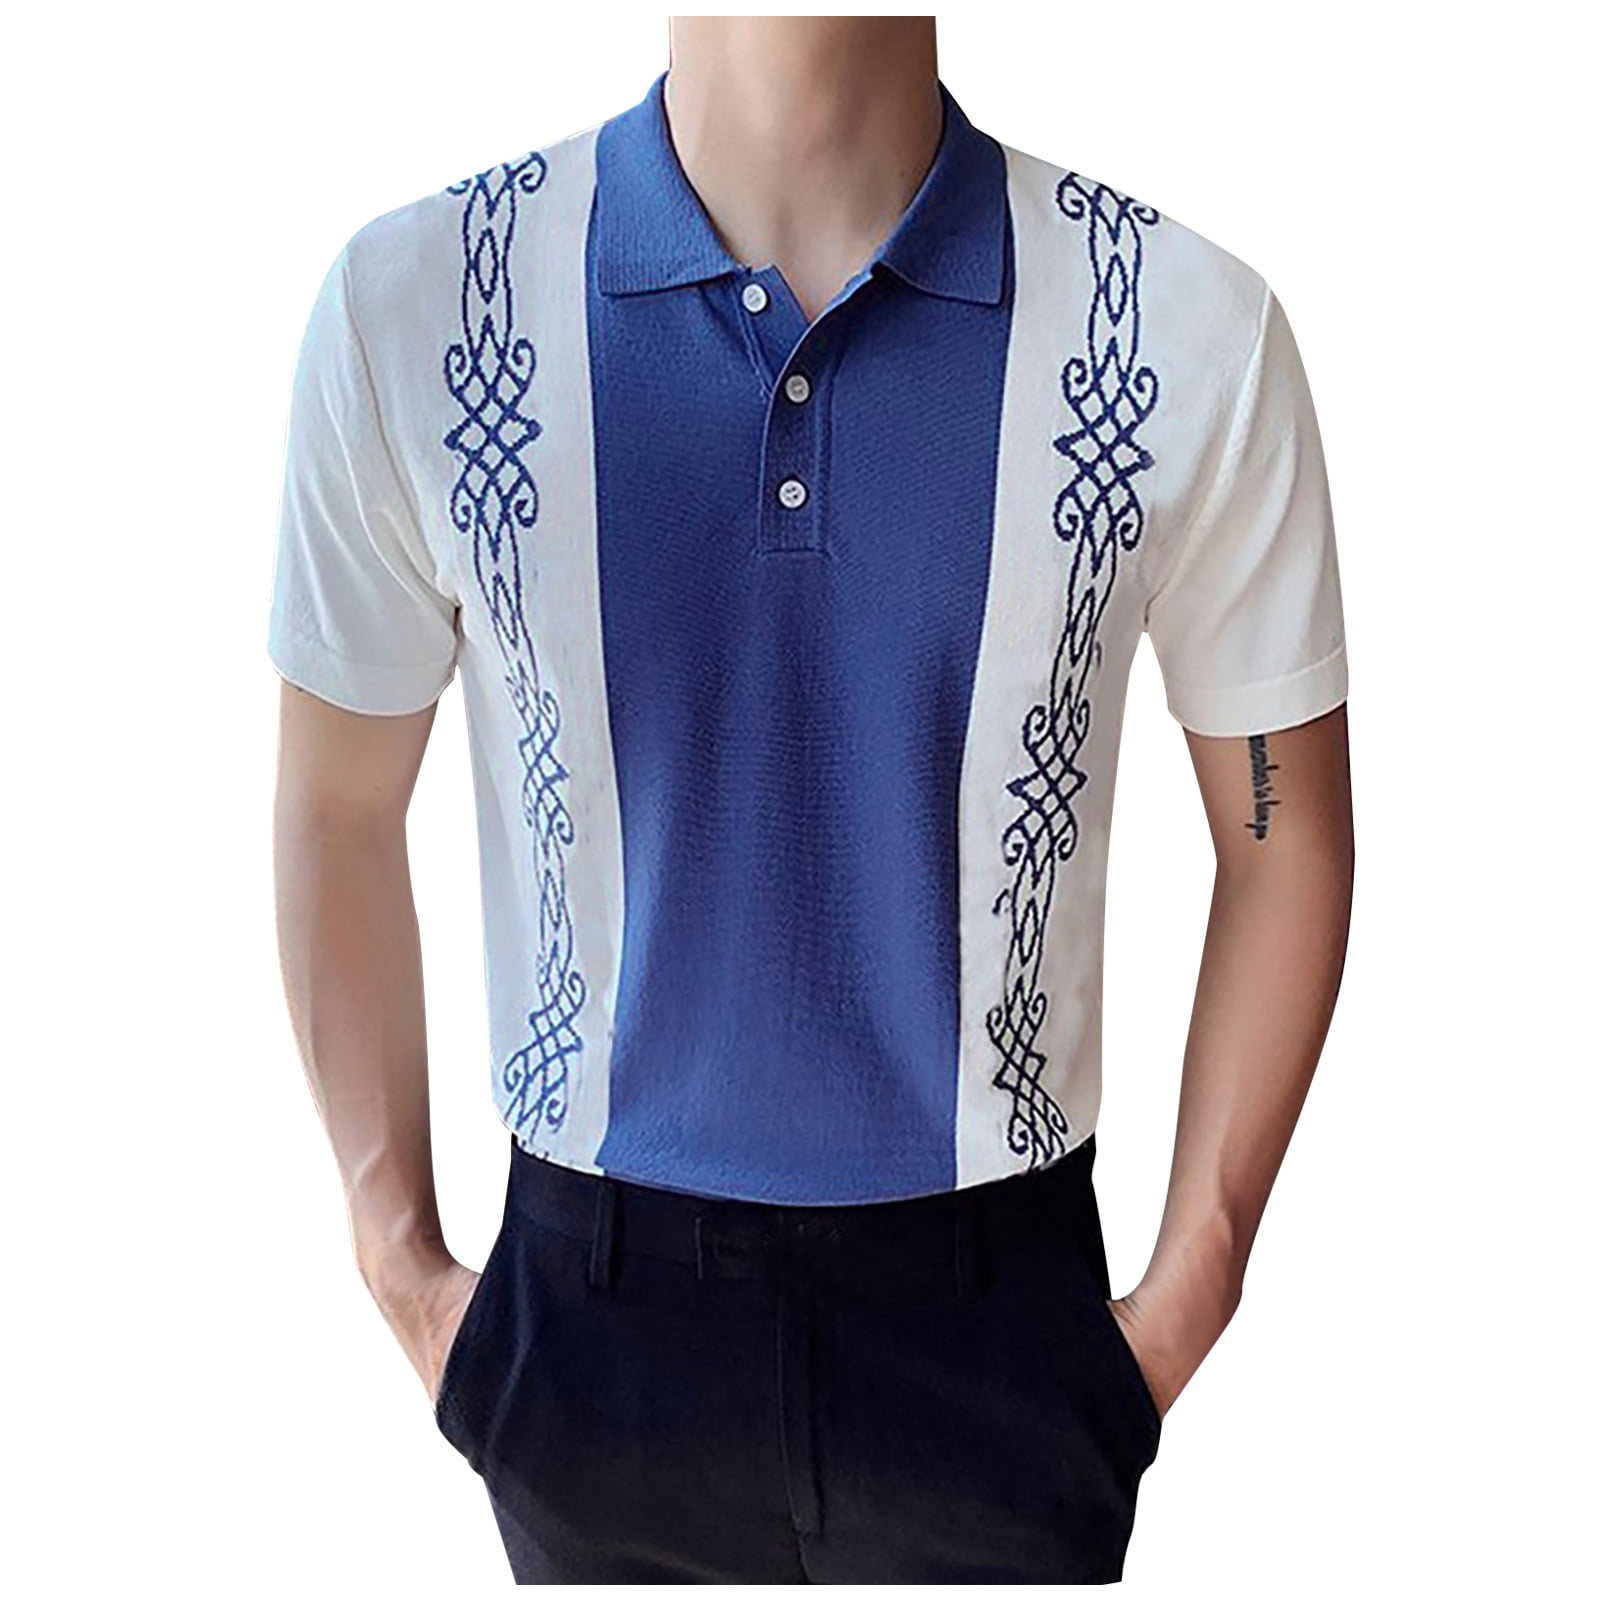 Juebong Men's Cable Knit Golf Shirts Fashion Street Slim Fit Short Sleeve  Hawaii Polo Shirts, Medium, Blue